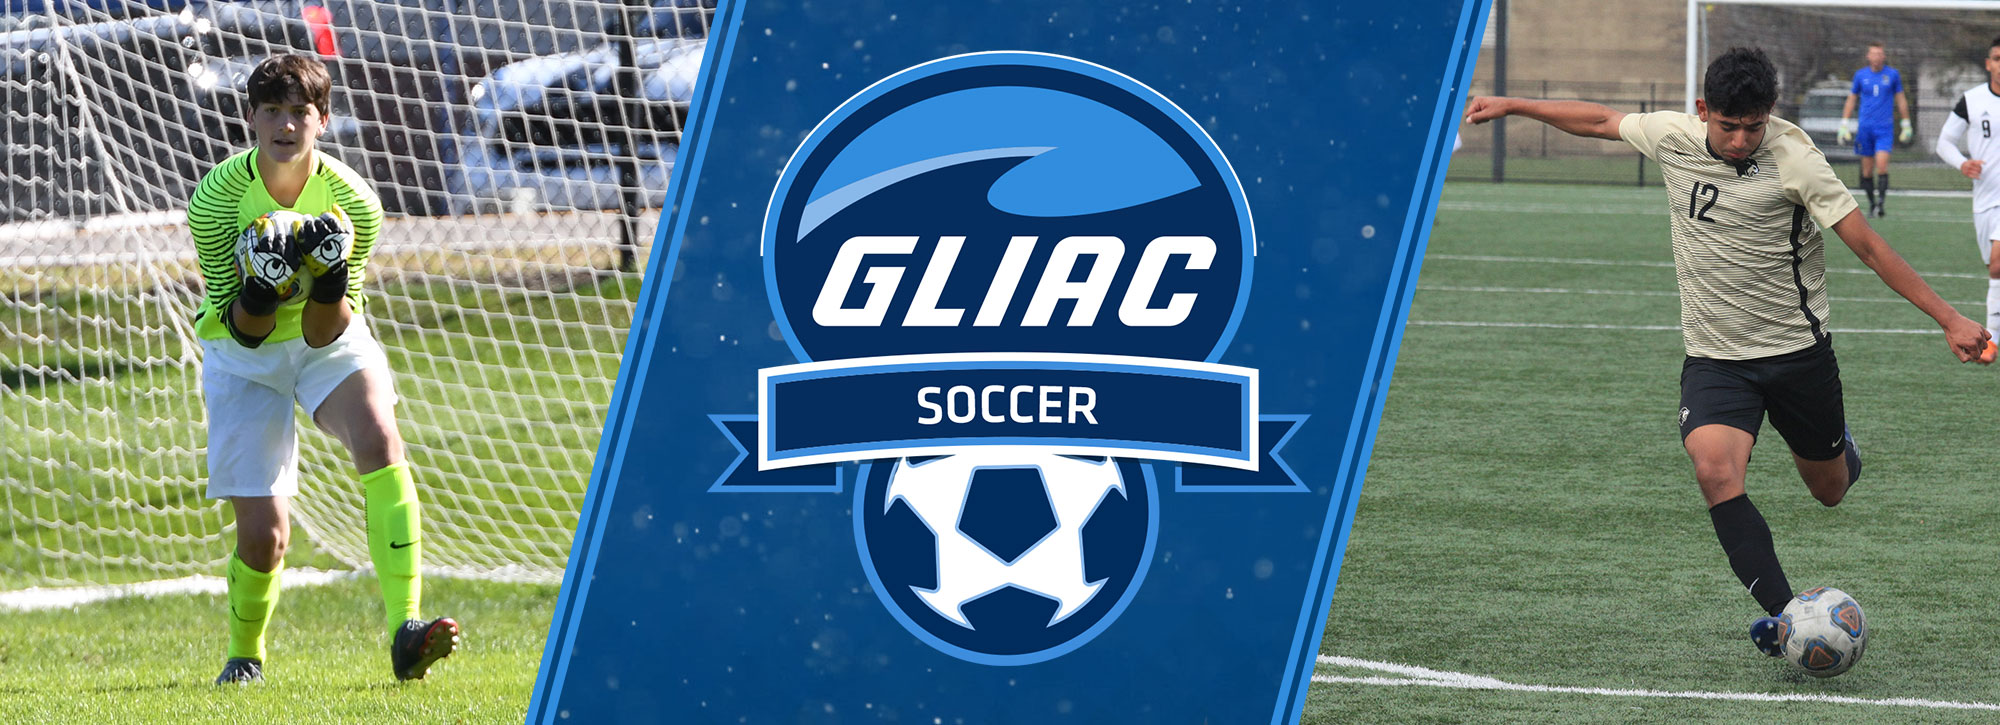 Purdue Northwest's Bahena, Northwood's Cecchini Claim GLIAC Men's Soccer Player of the Week Honors